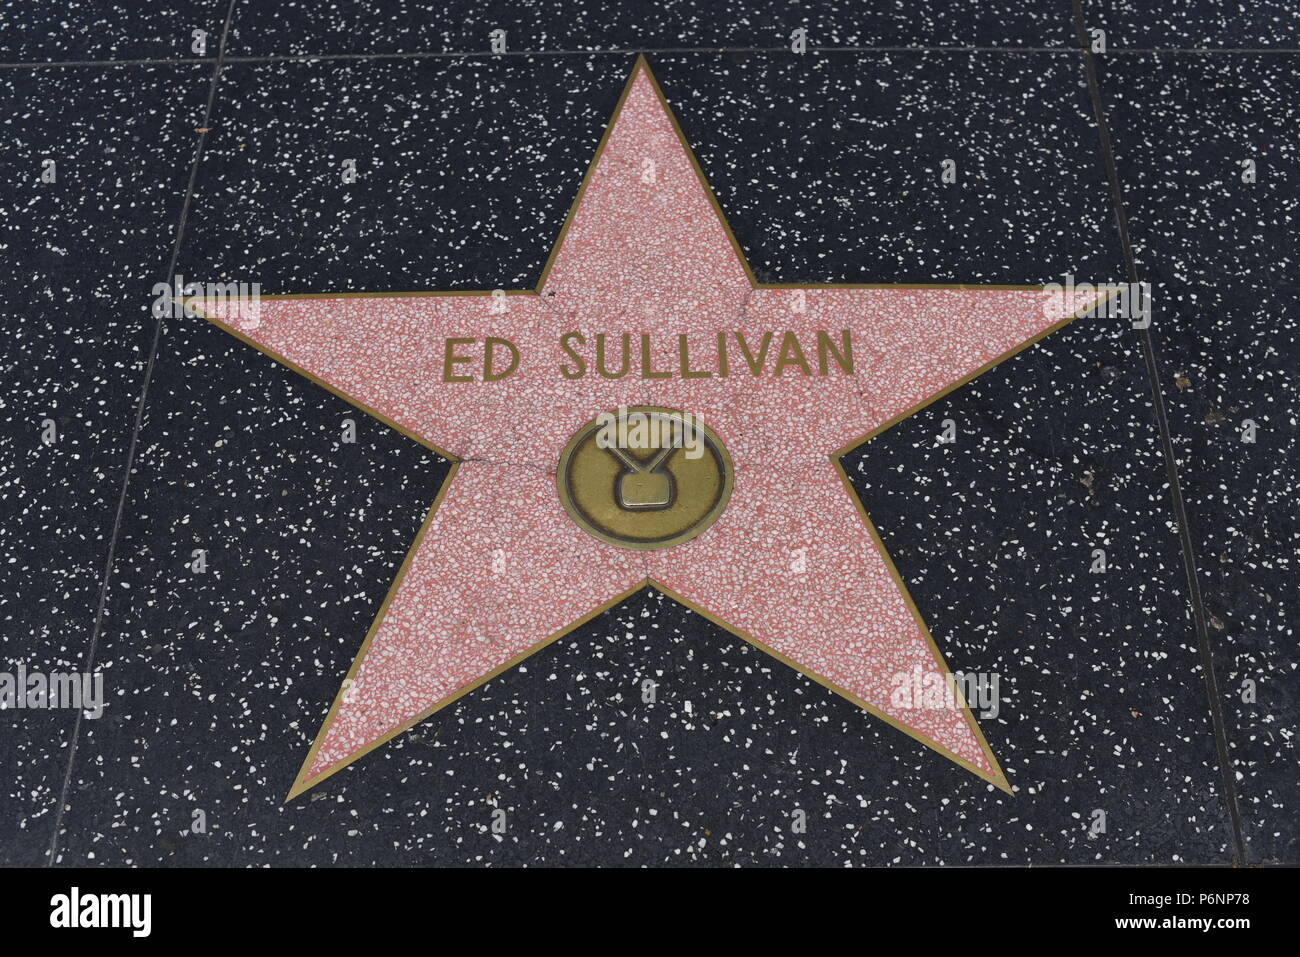 HOLLYWOOD, CA - 29. Juni: Ed Sullivan Stern auf dem Hollywood Walk of Fame in Hollywood, Kalifornien am 29. Juni 2018. Stockfoto